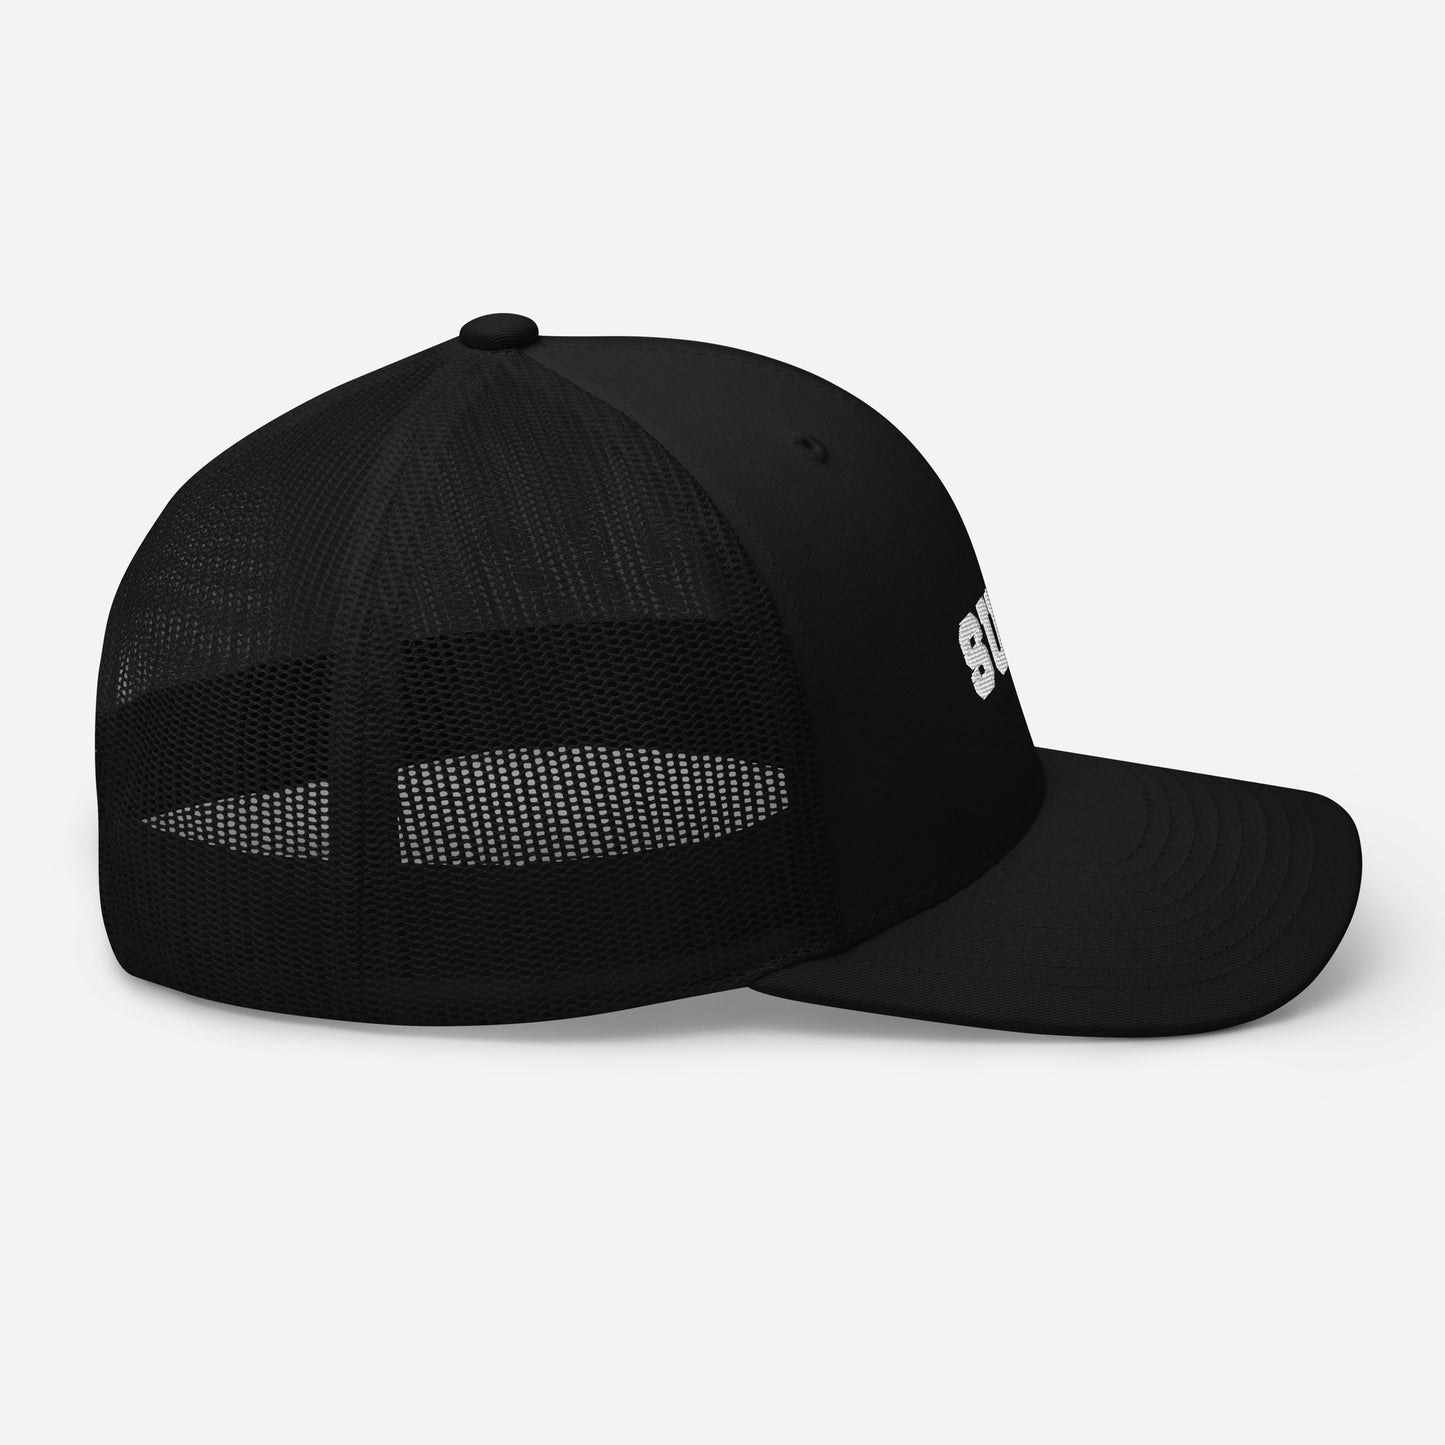 Surp SFBUFF Black Trucker Cap Hat